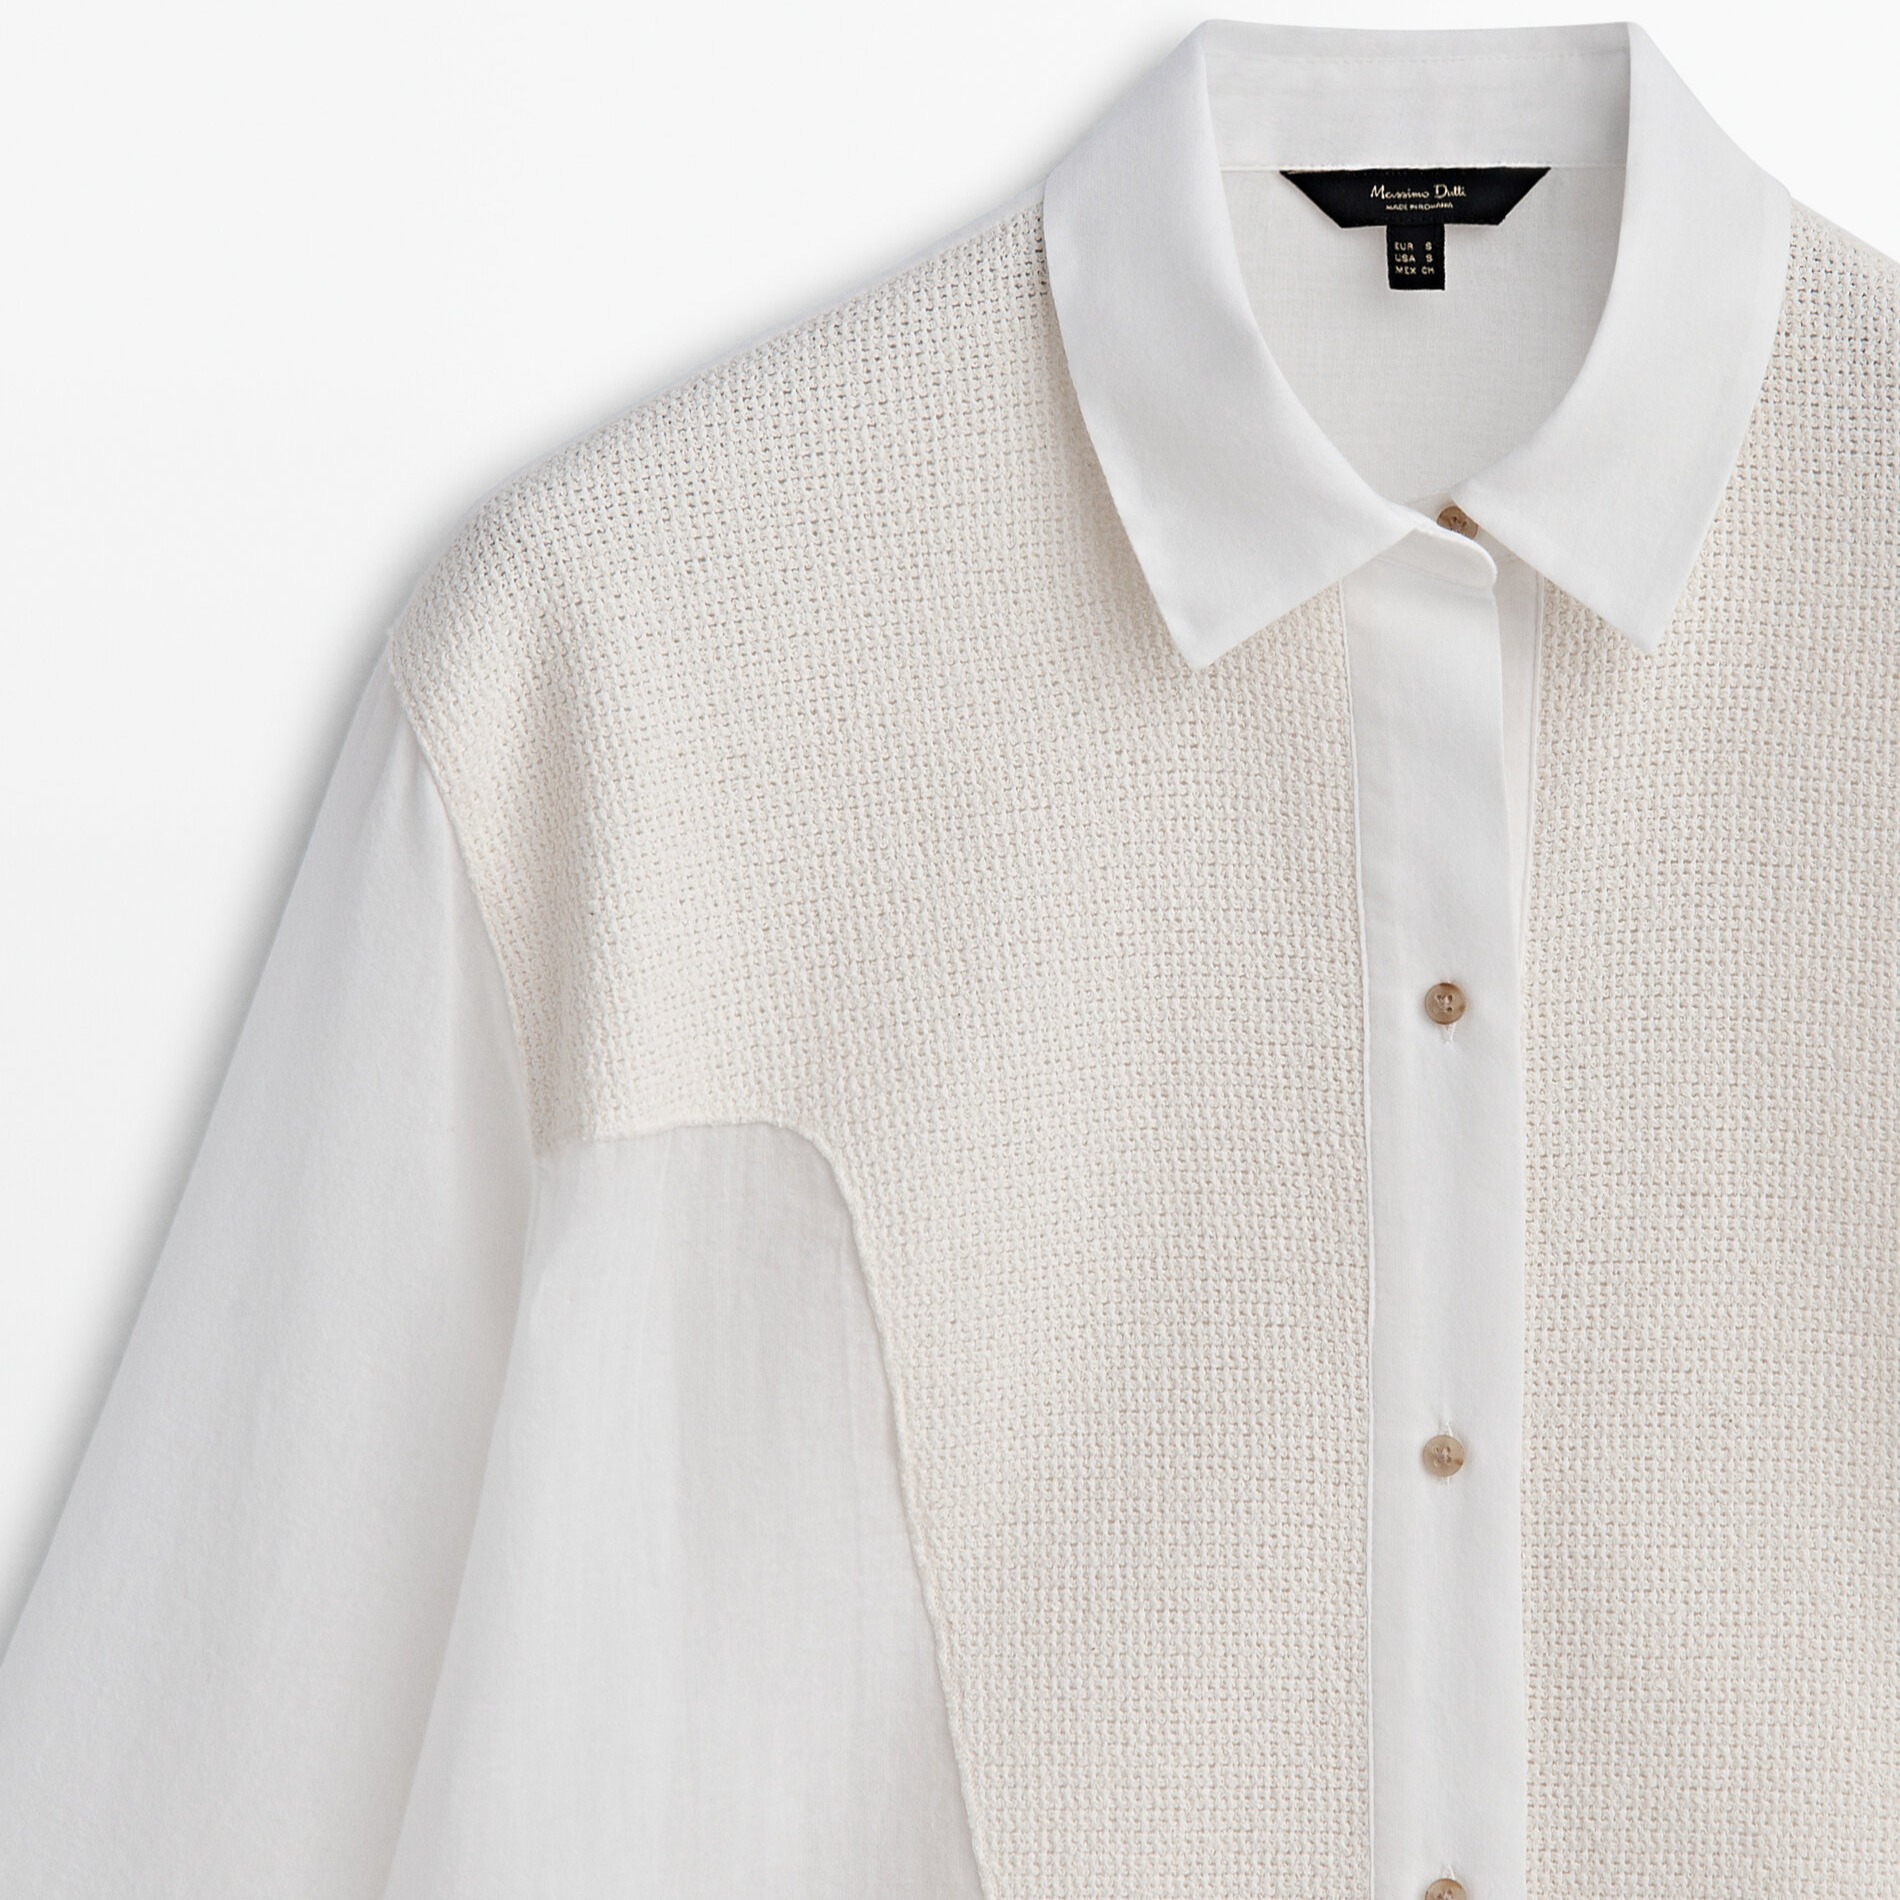 White details. Хлястик из ткани на рубашке. Massimo Dutti рубашка шитье белая хлопок. Рубашки материал белоснежный глянец. Рубашка massimo Dutti женская белая коричневый и синий.